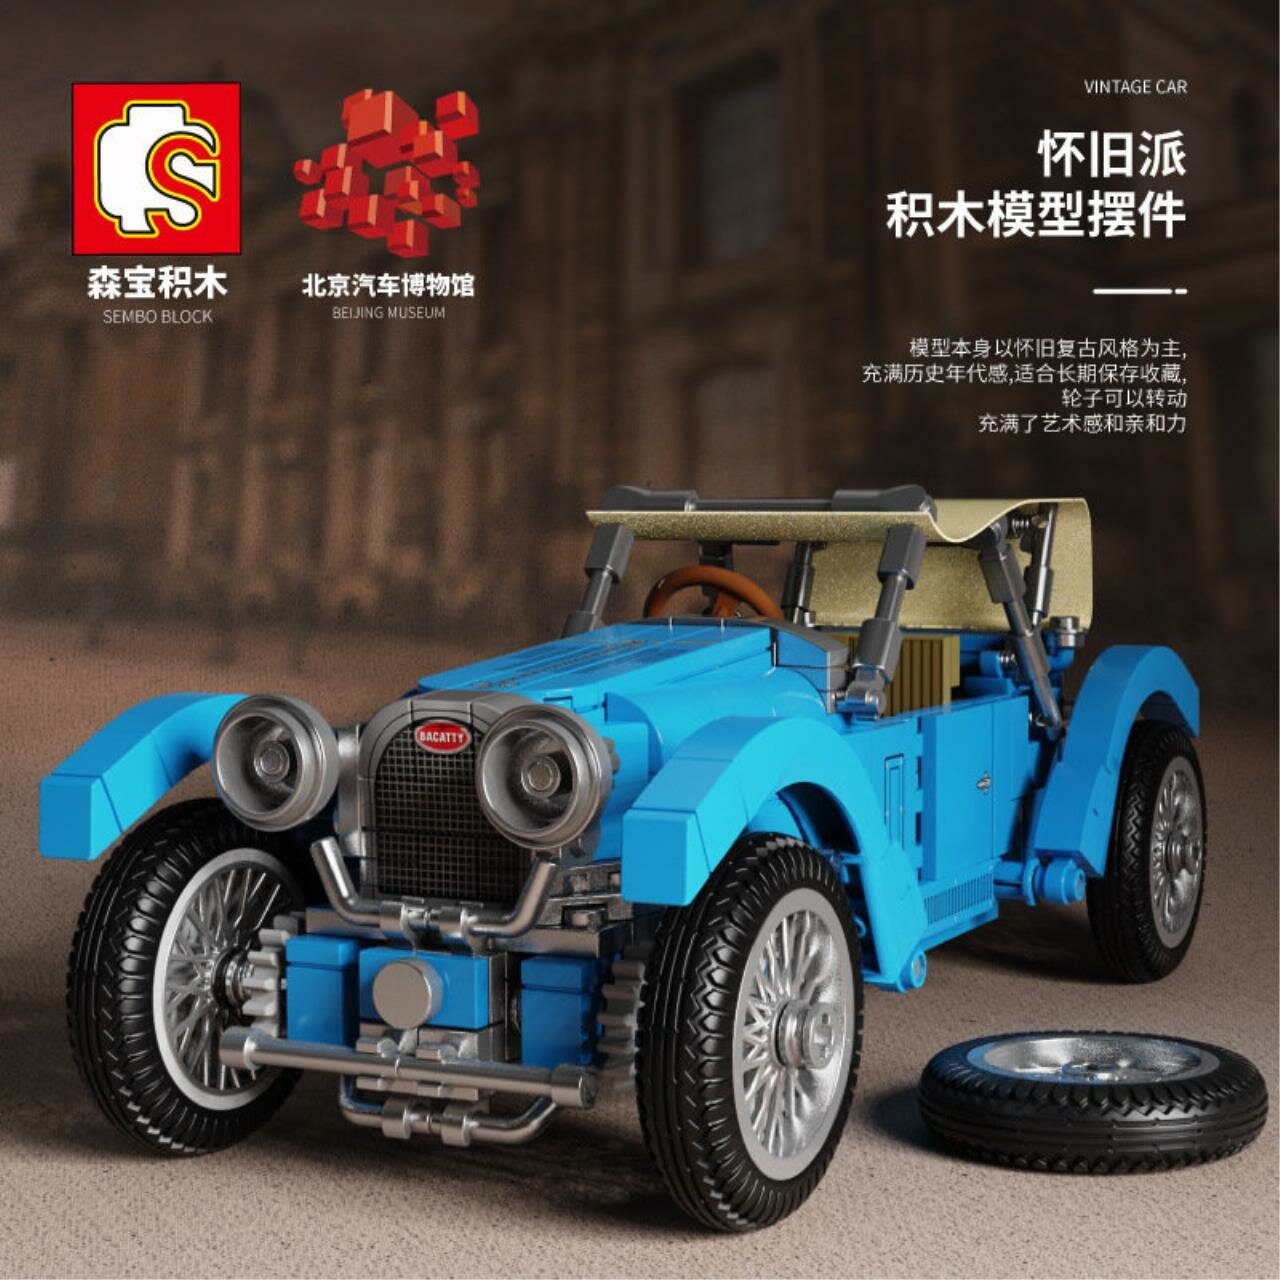 Конструктор Sembo Block Пекинский автомузей: Bugatti T38A, Техник, серия Beijing Auto Museum, 482 детали, 705600